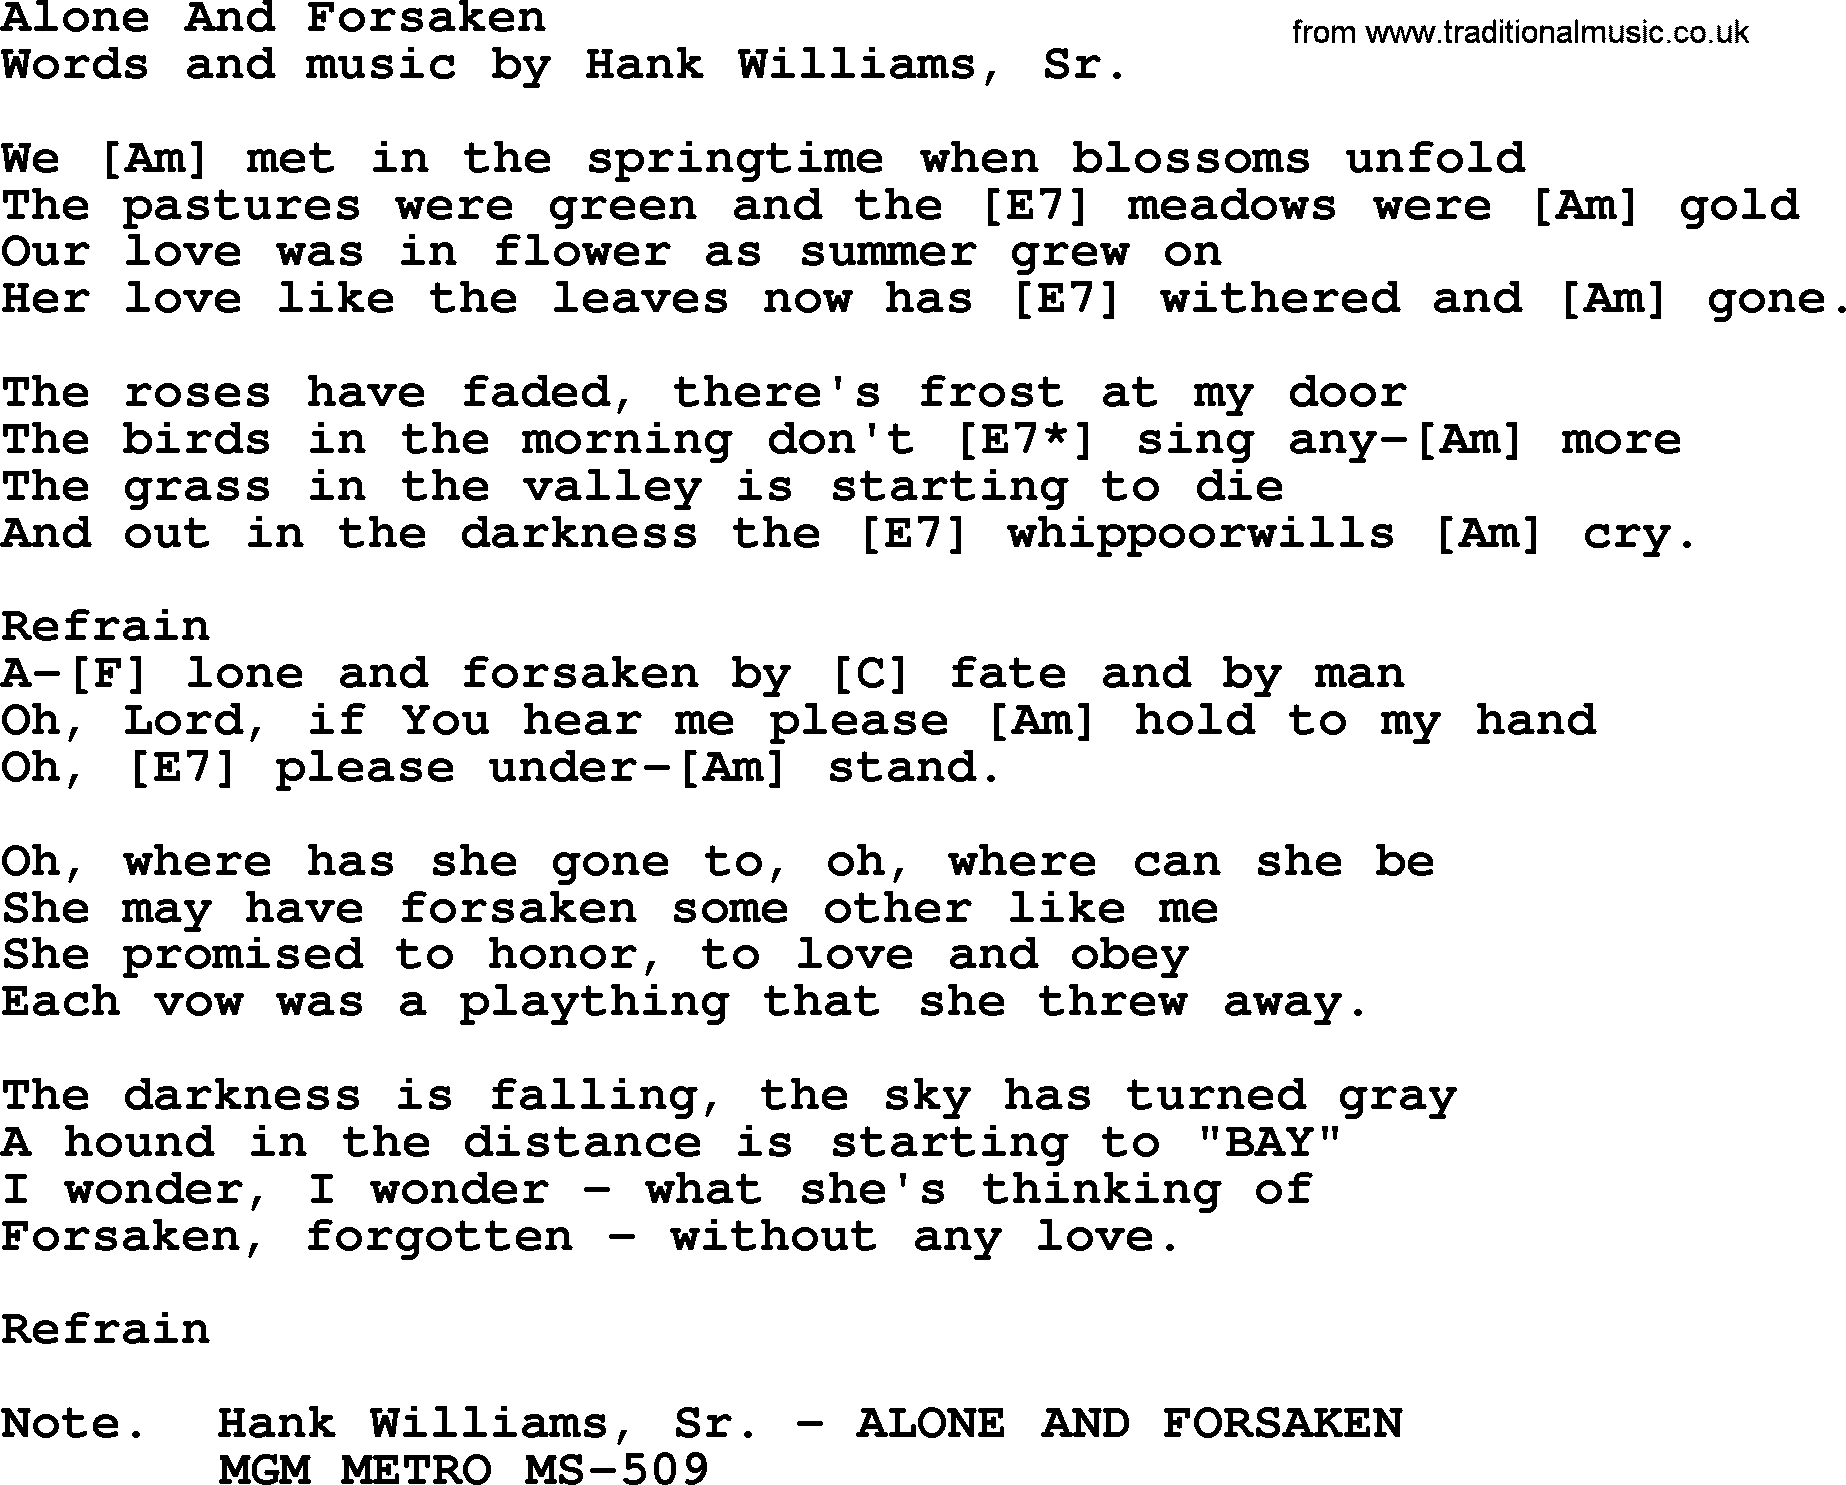 Hank Williams song Alone And Forsaken, lyrics and chords